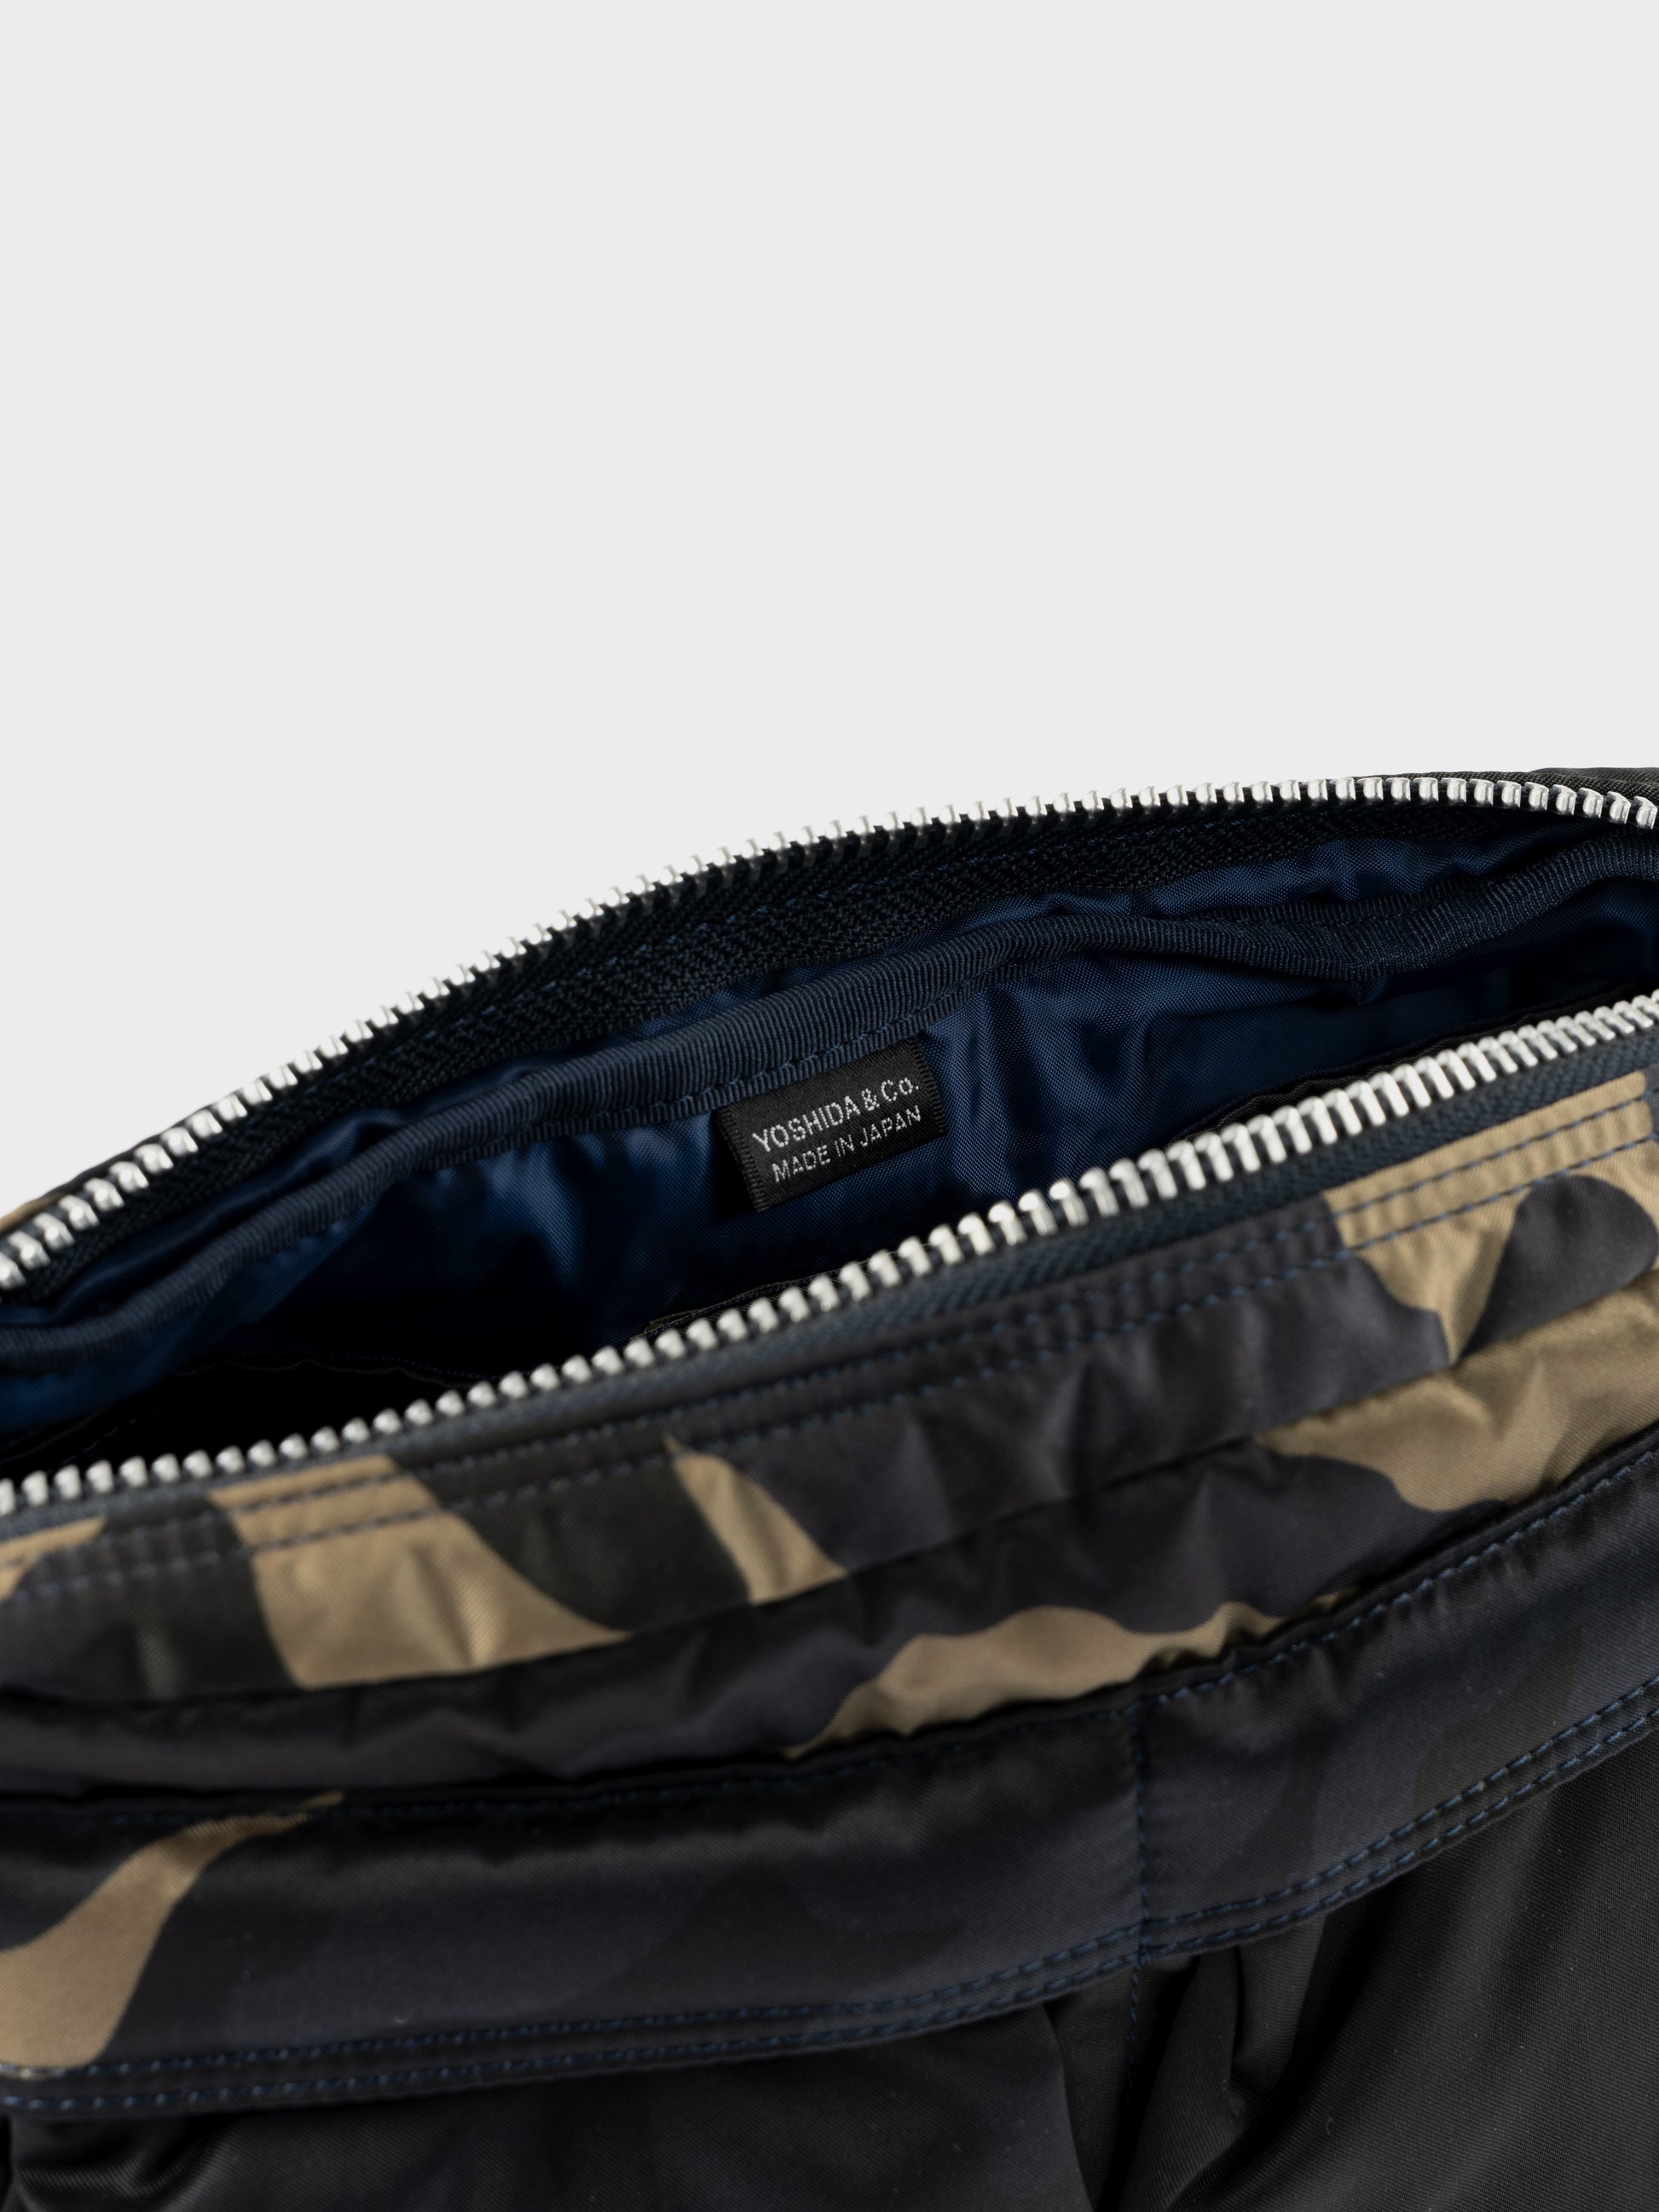 Porter-Yoshida & Co Counter Shade Shoulder Bag - Woodland Khaki